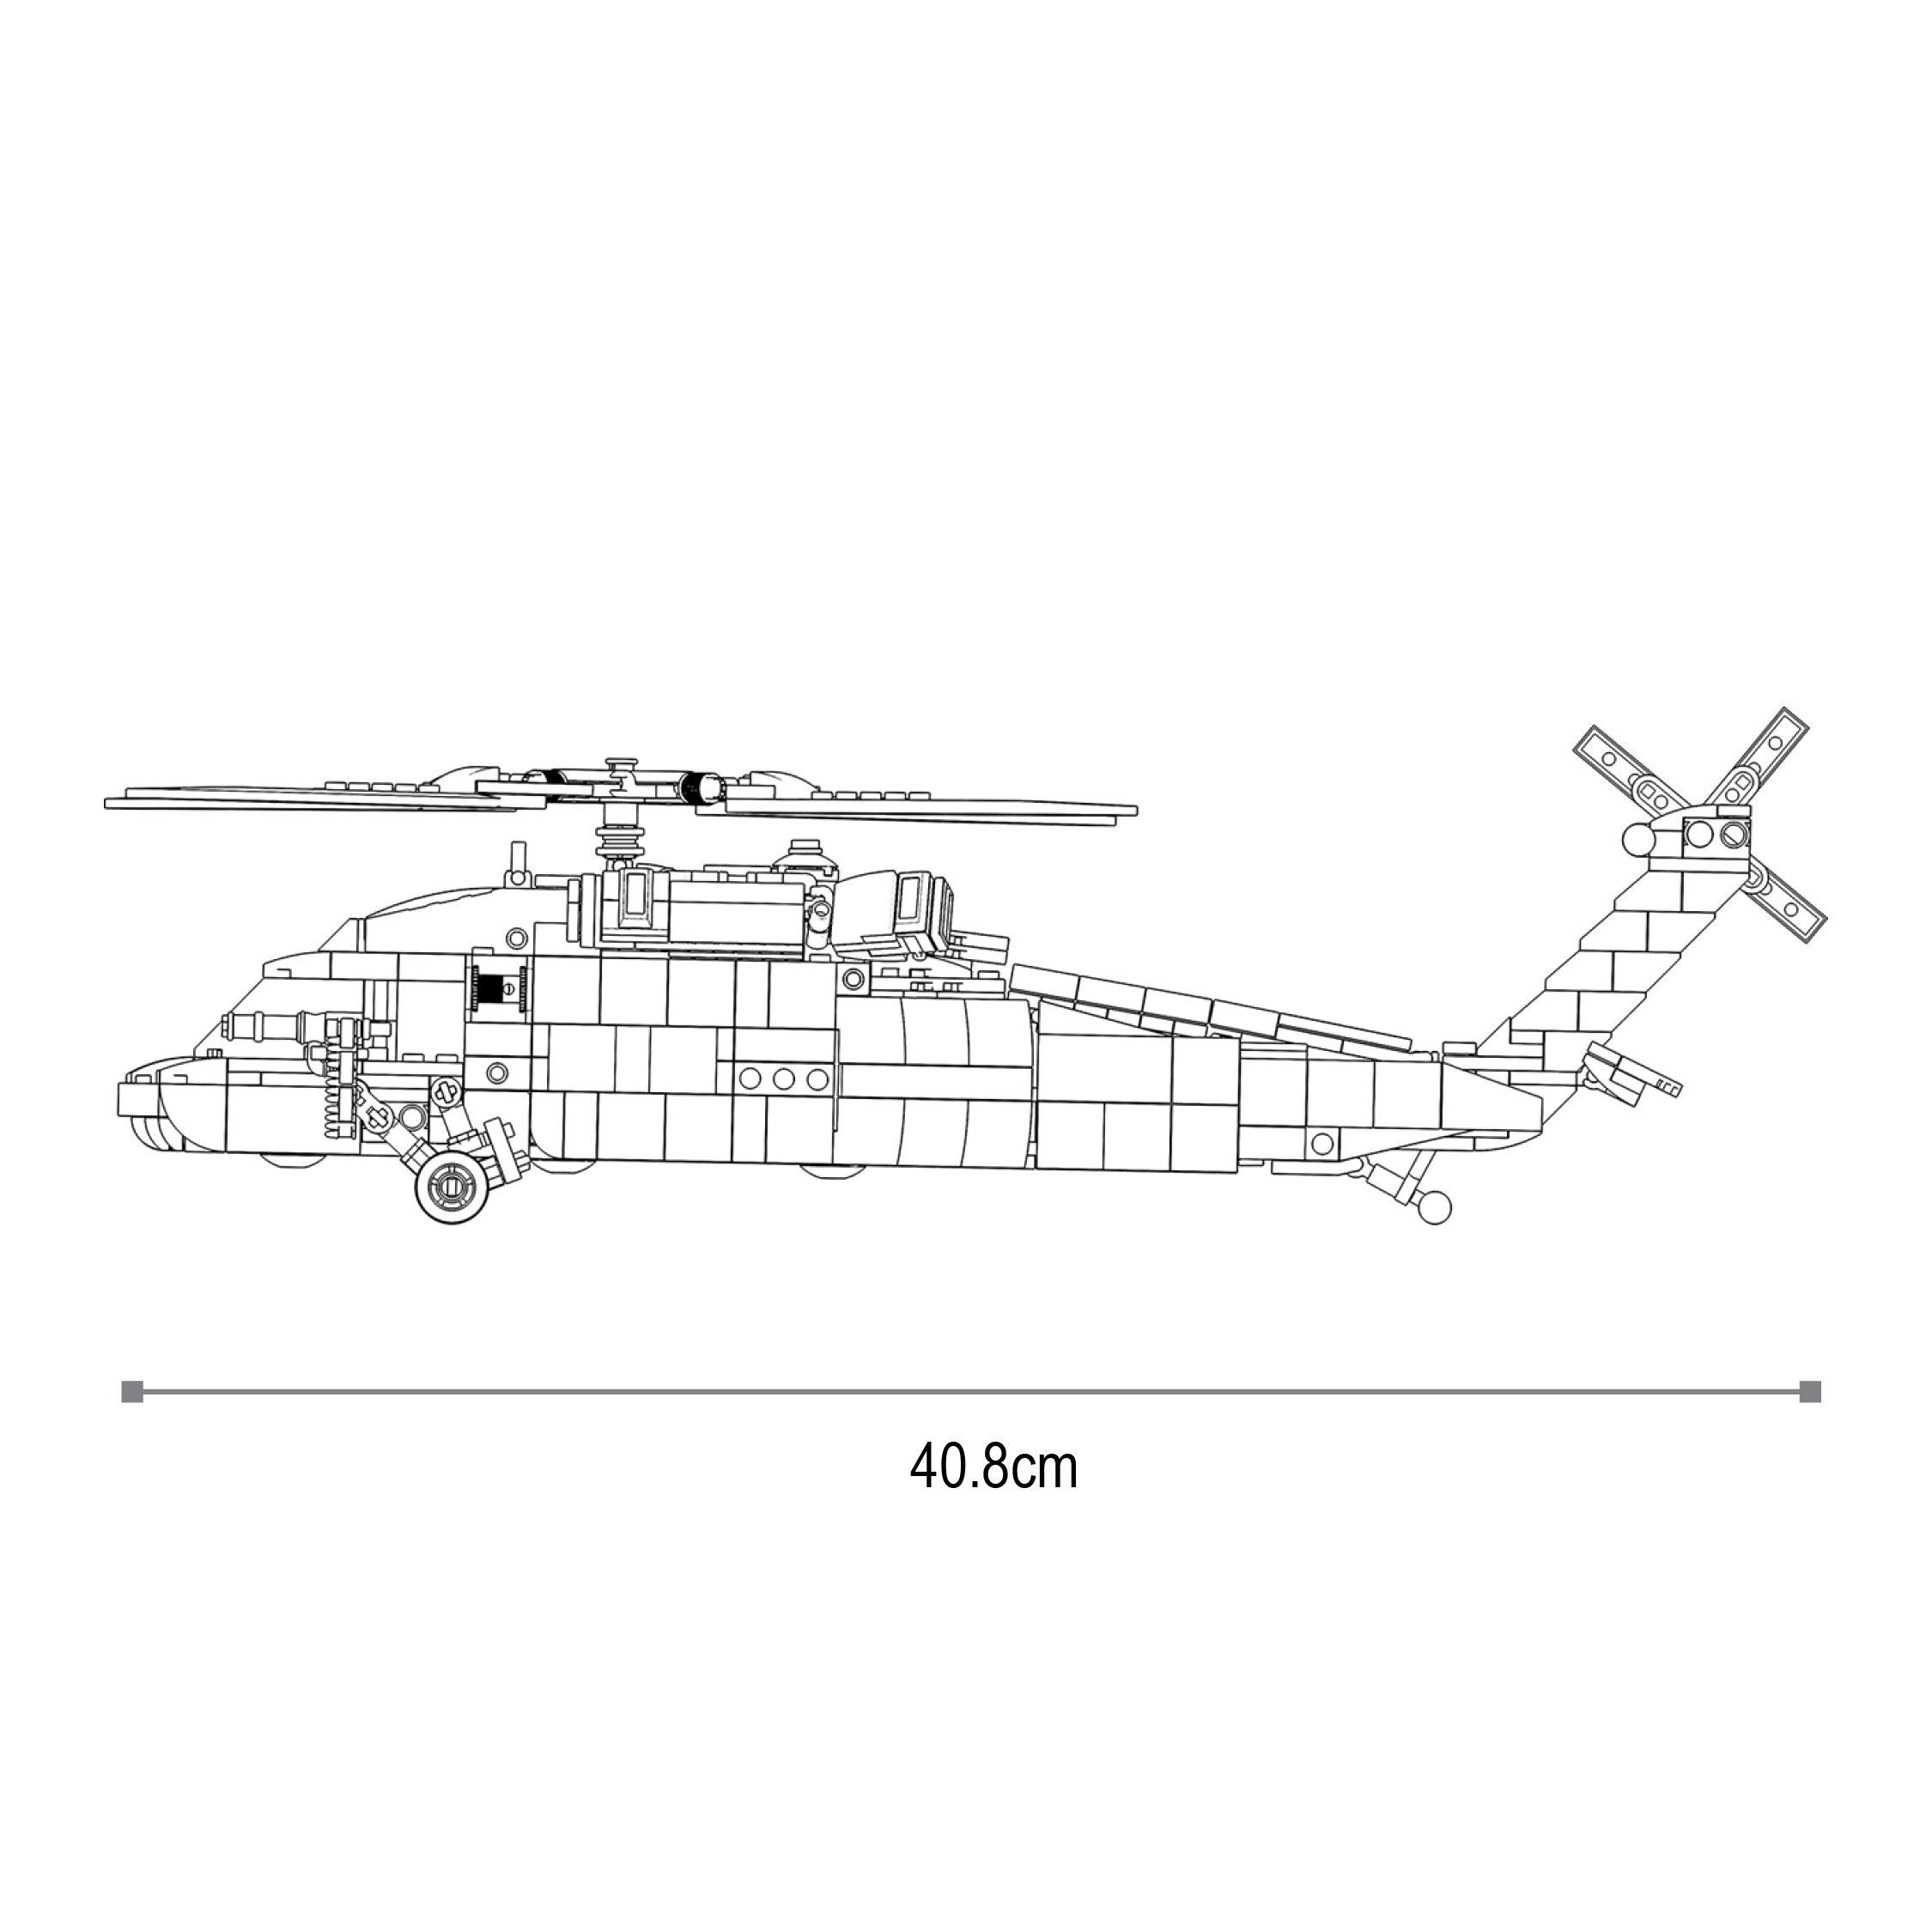 Sluban UH-60 Black Hawk, Building Blocks For Ages 8+ - FunCorp India